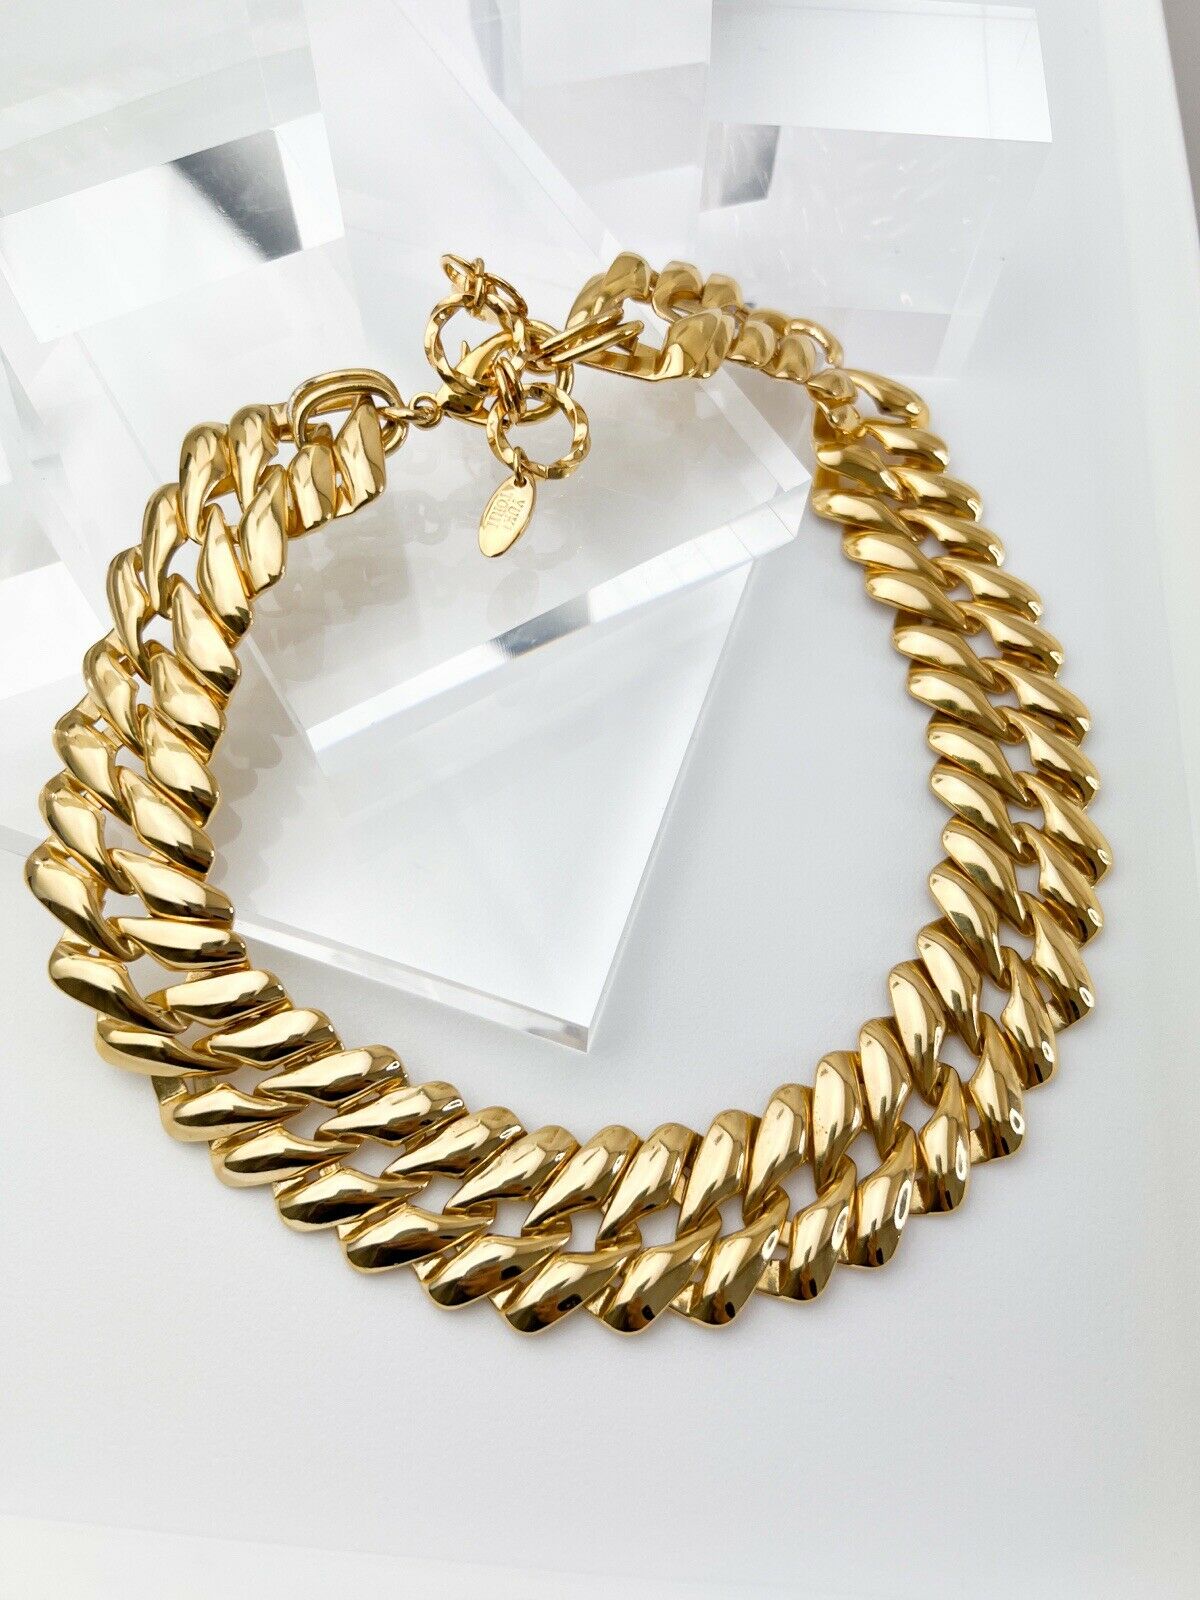 Yuki Torii Vintage Necklace Chunky Chain Choker Gold